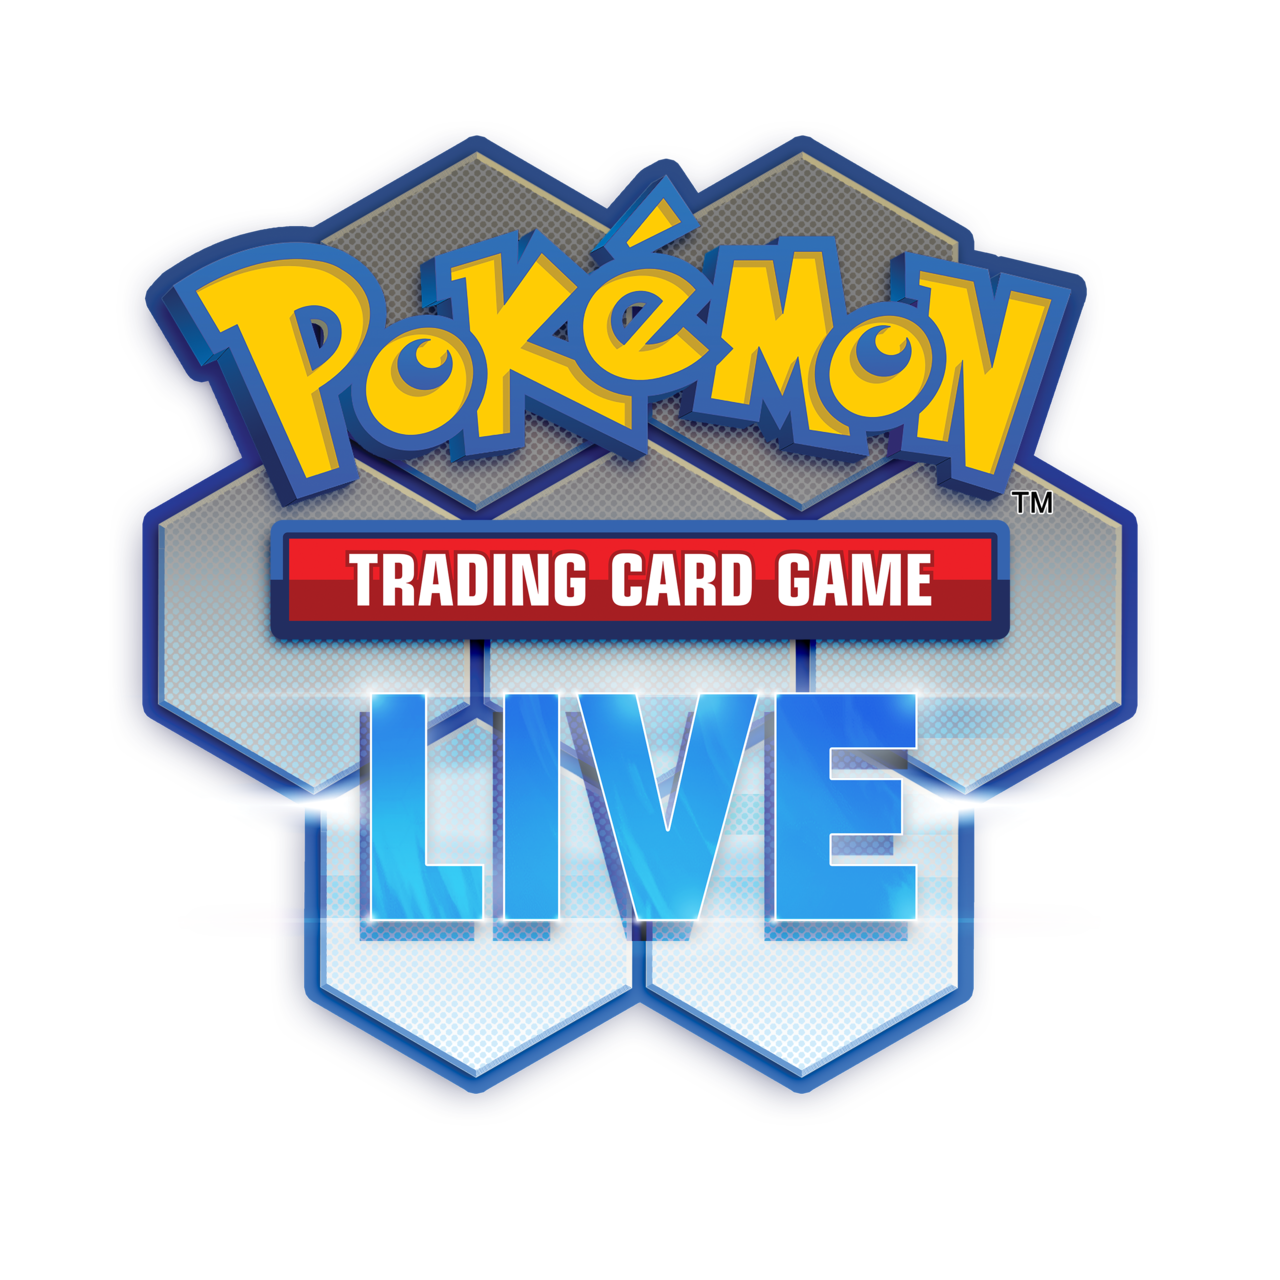 Pokémon TCG Live arrives on PC today, replacing TCG Online